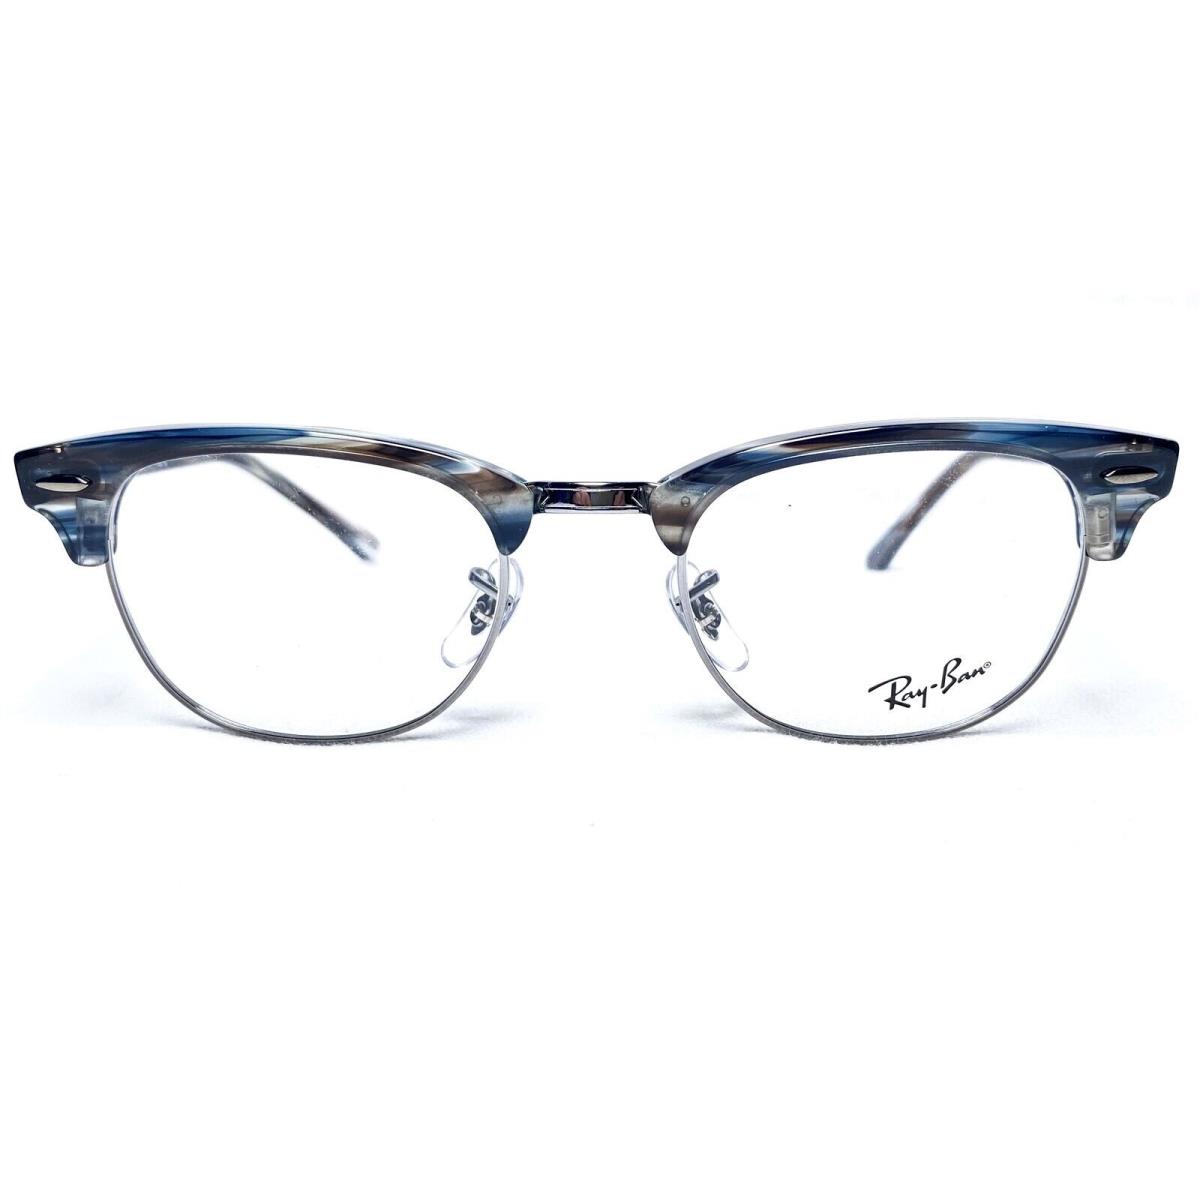 Ray Ban Clubmaster RB5154 5750 Striped Grey/blue Eyeglasses Frames 49/21 140 - Blue/Grey Striped, Frame: Gray, Manufacturer: